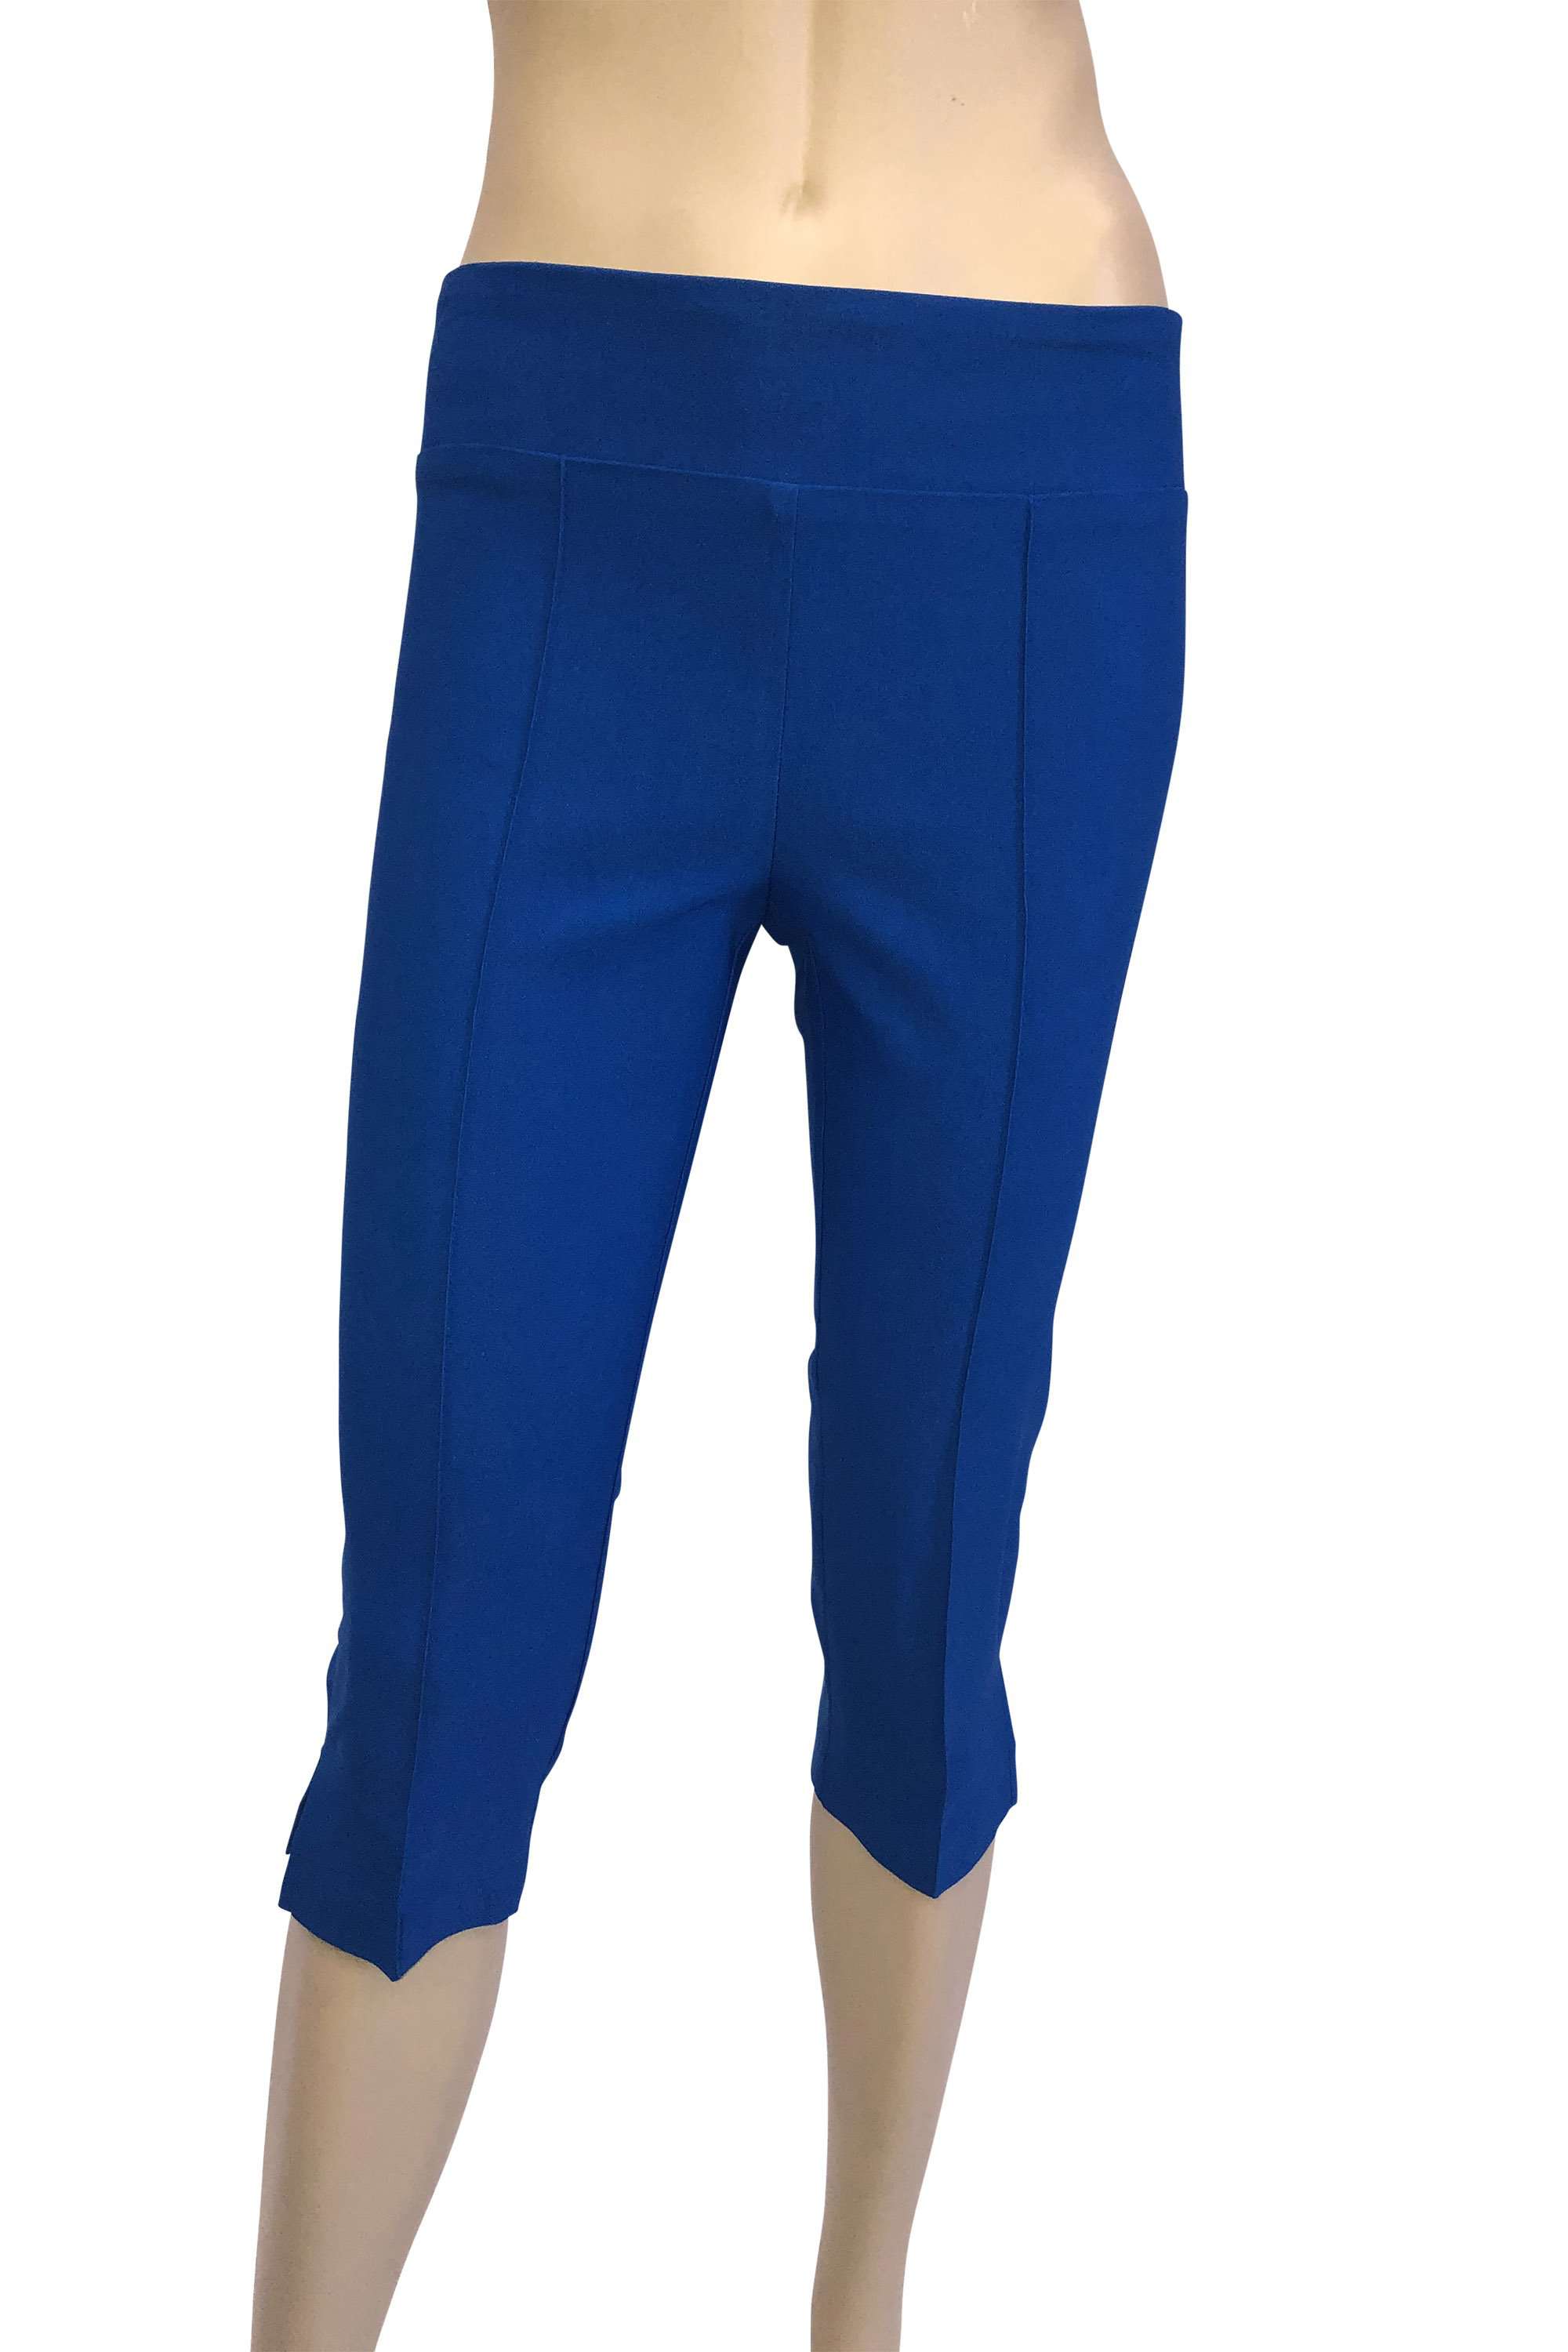 Women's Capri Pants Royal Blue Capris Now 50% Off Quality Stretch Comf –  Yvonne Marie